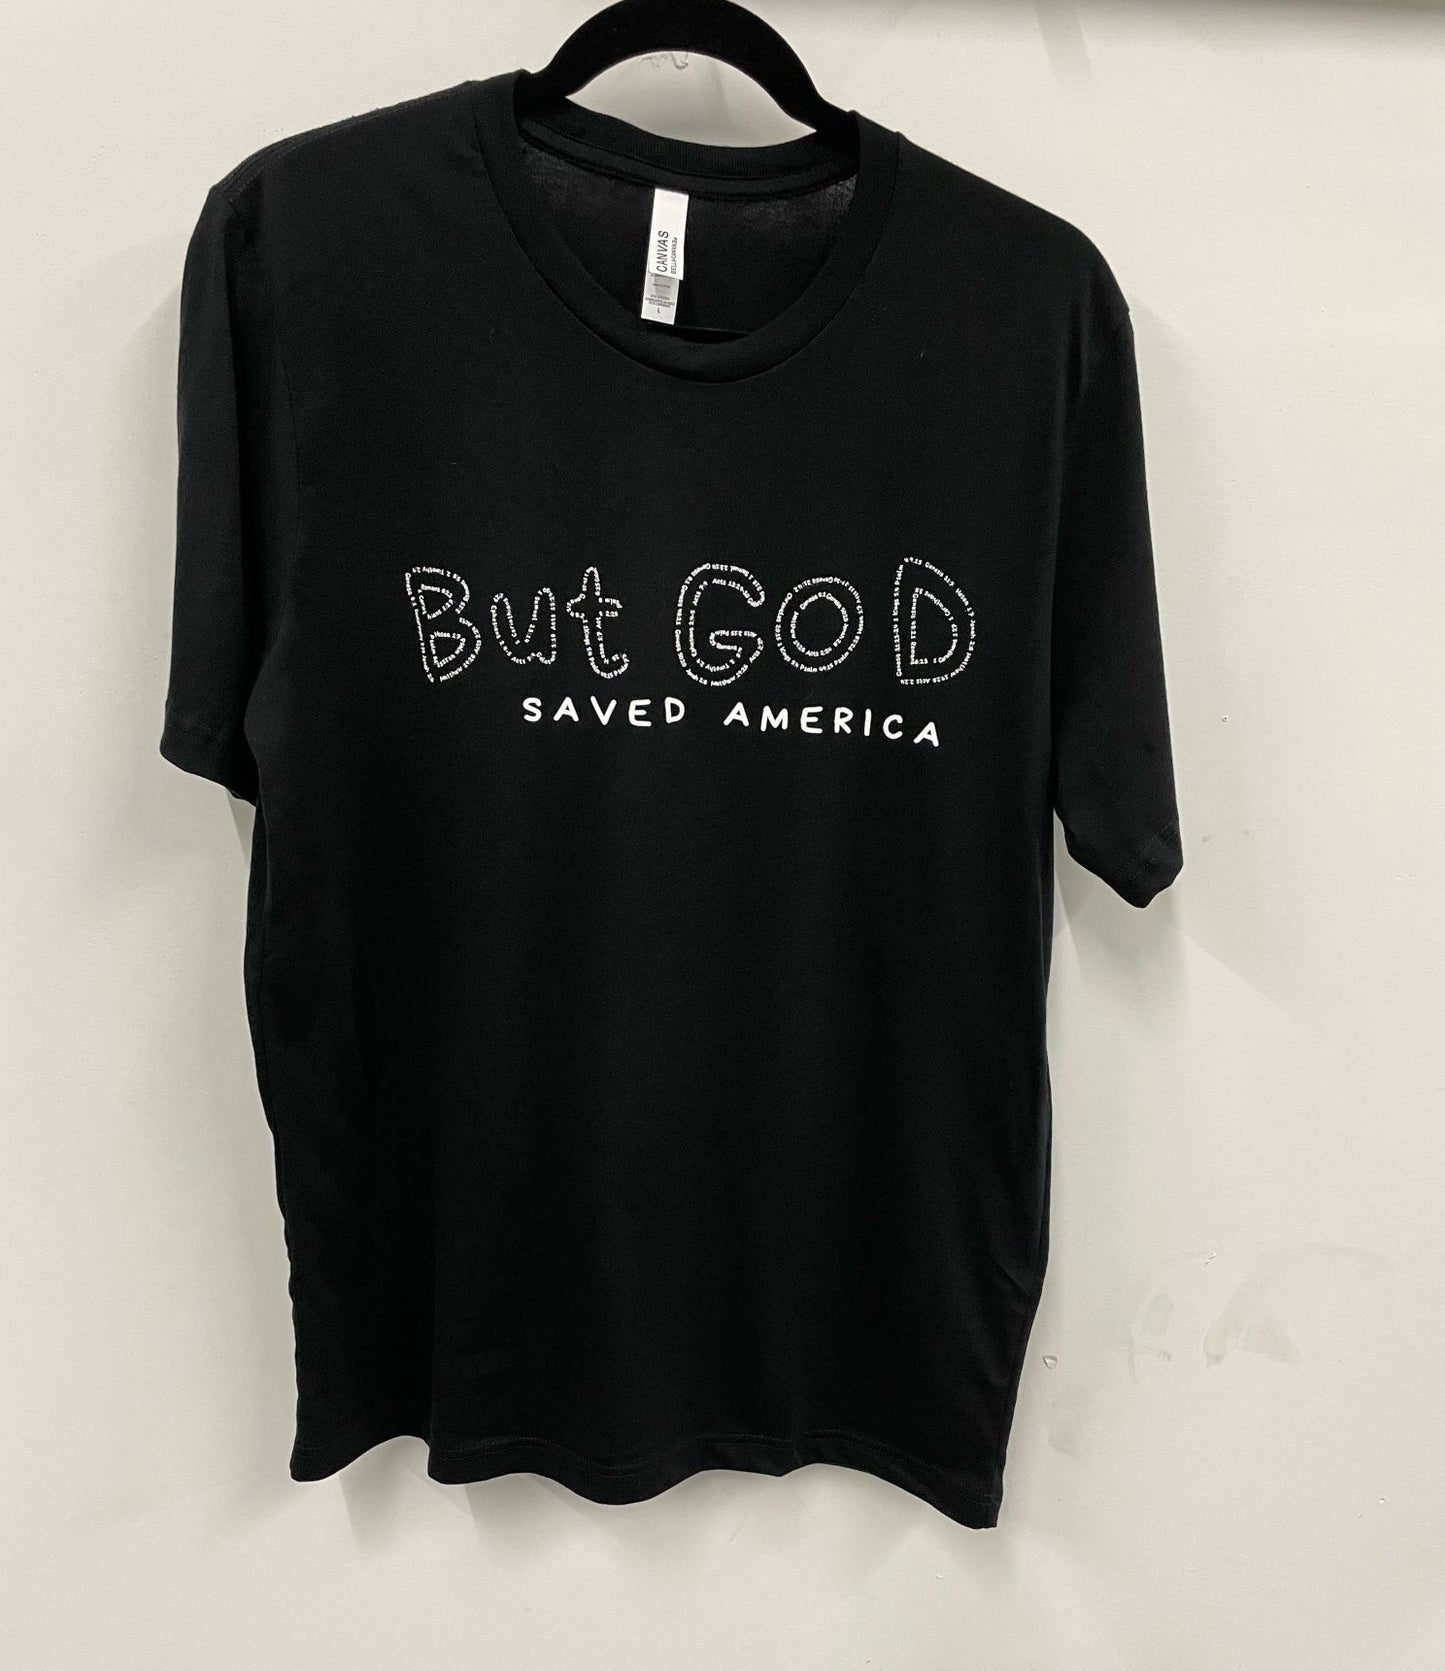 But GOD Saved America Shirt